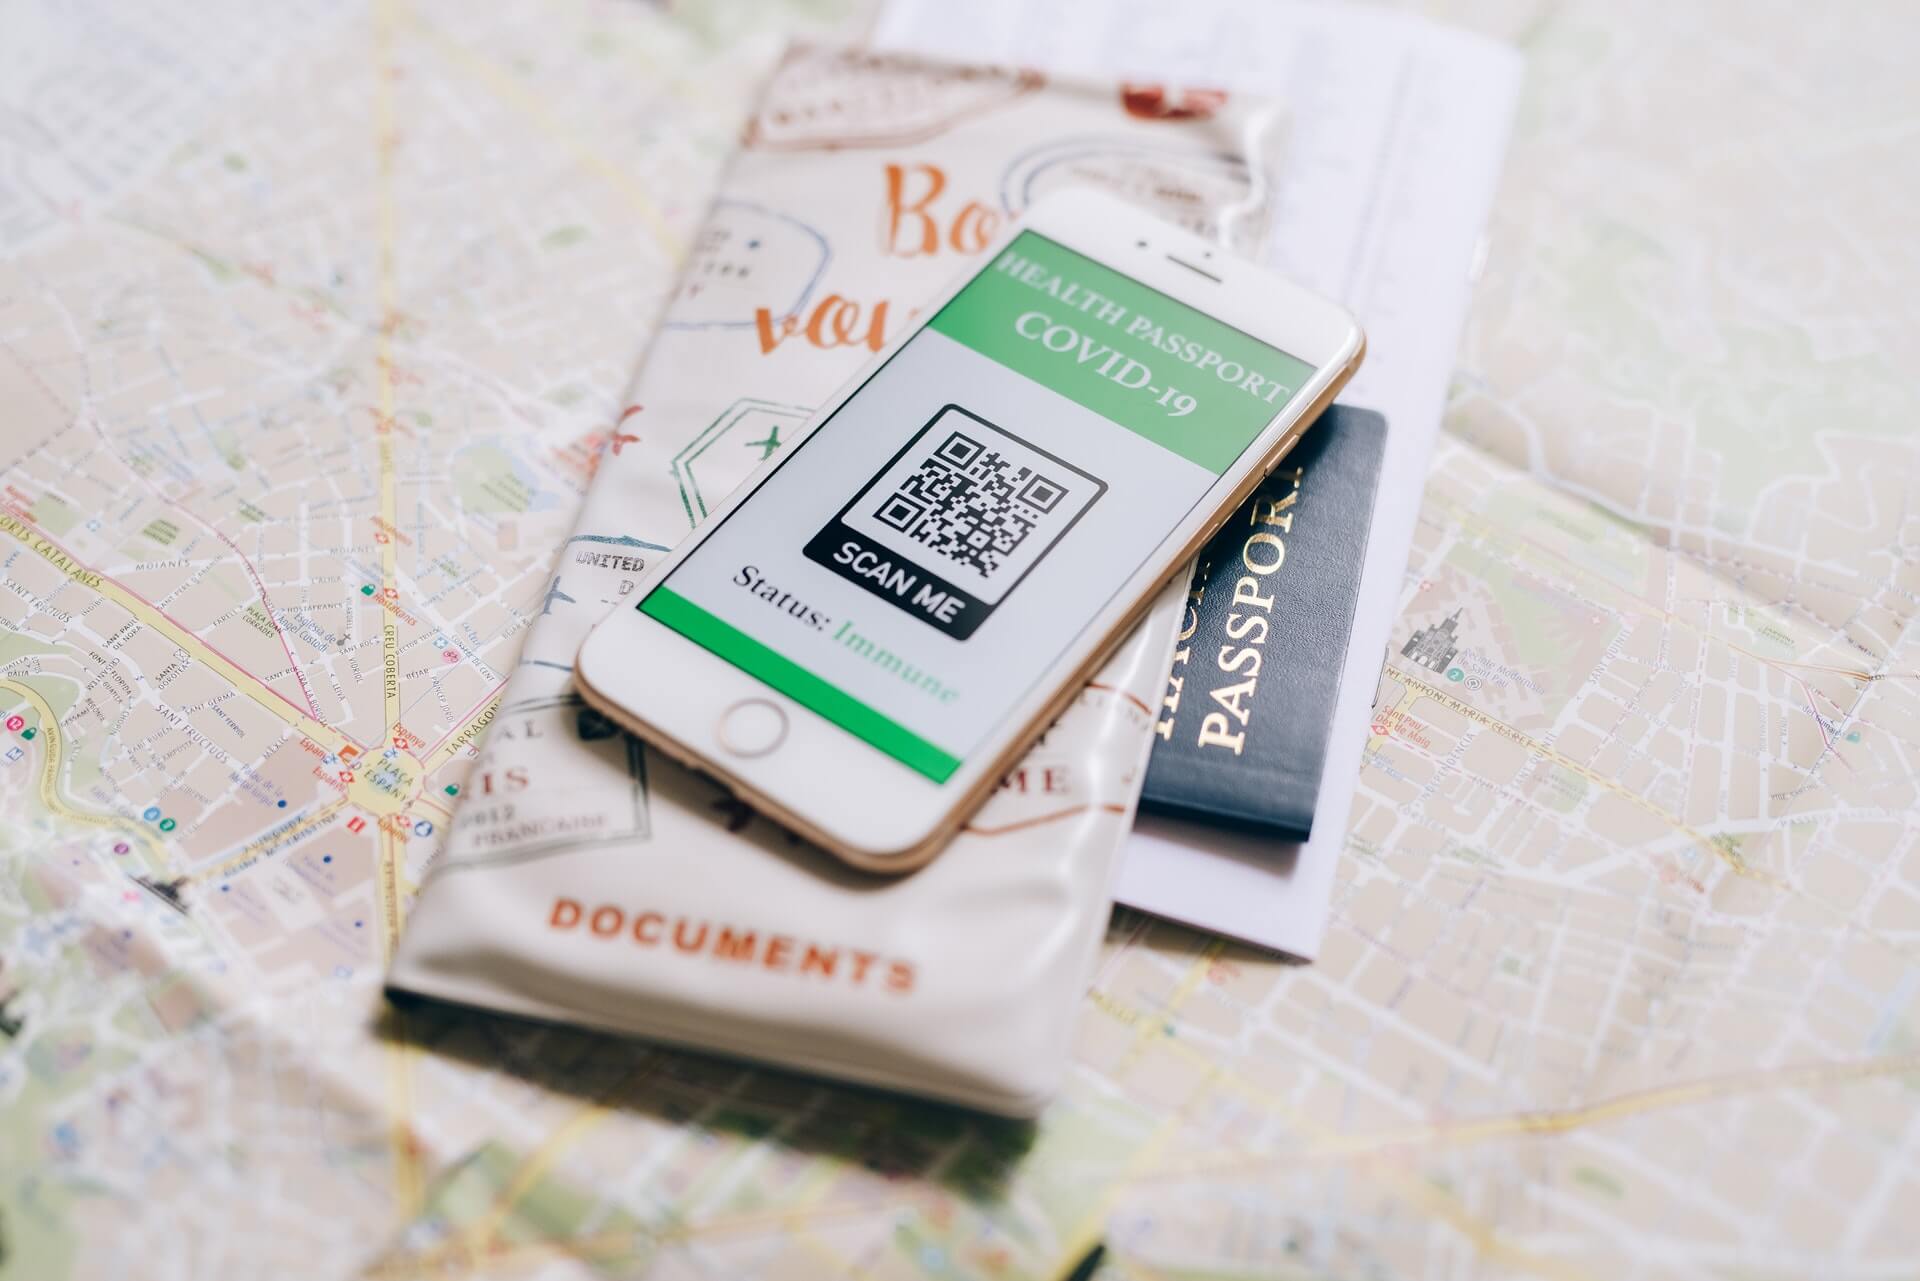 Vaccine passport on phone sitting on map and passport